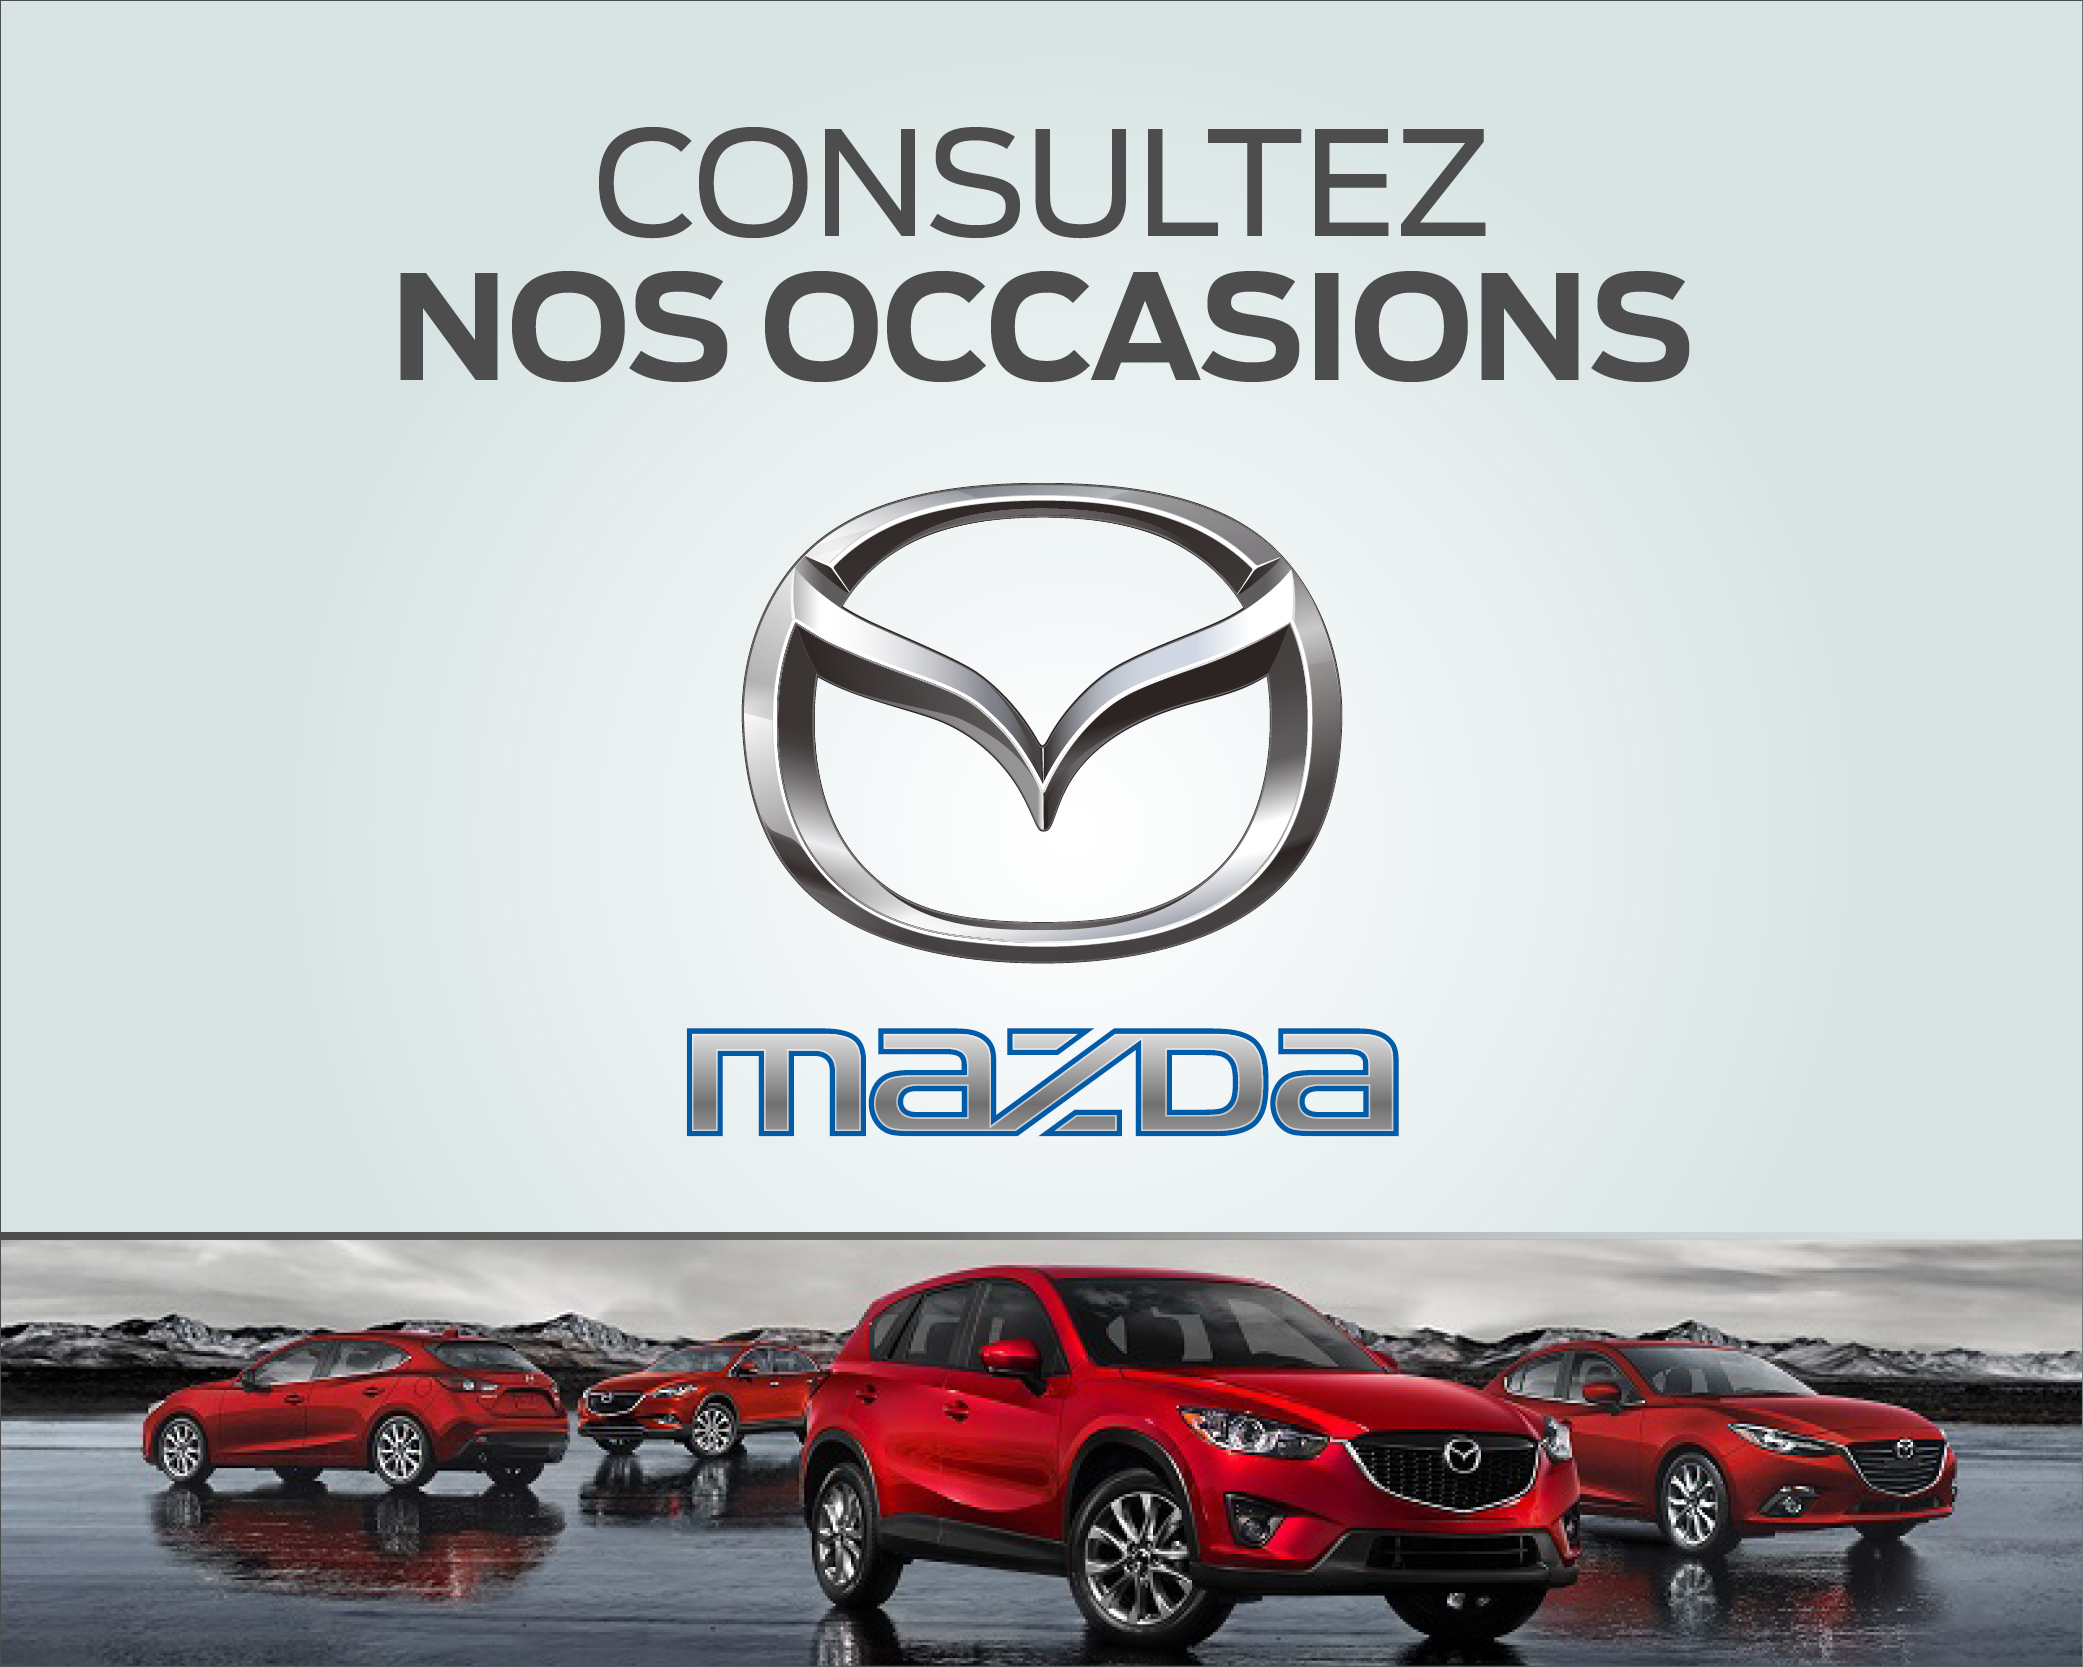 MAZDA - Progeda Automobiles